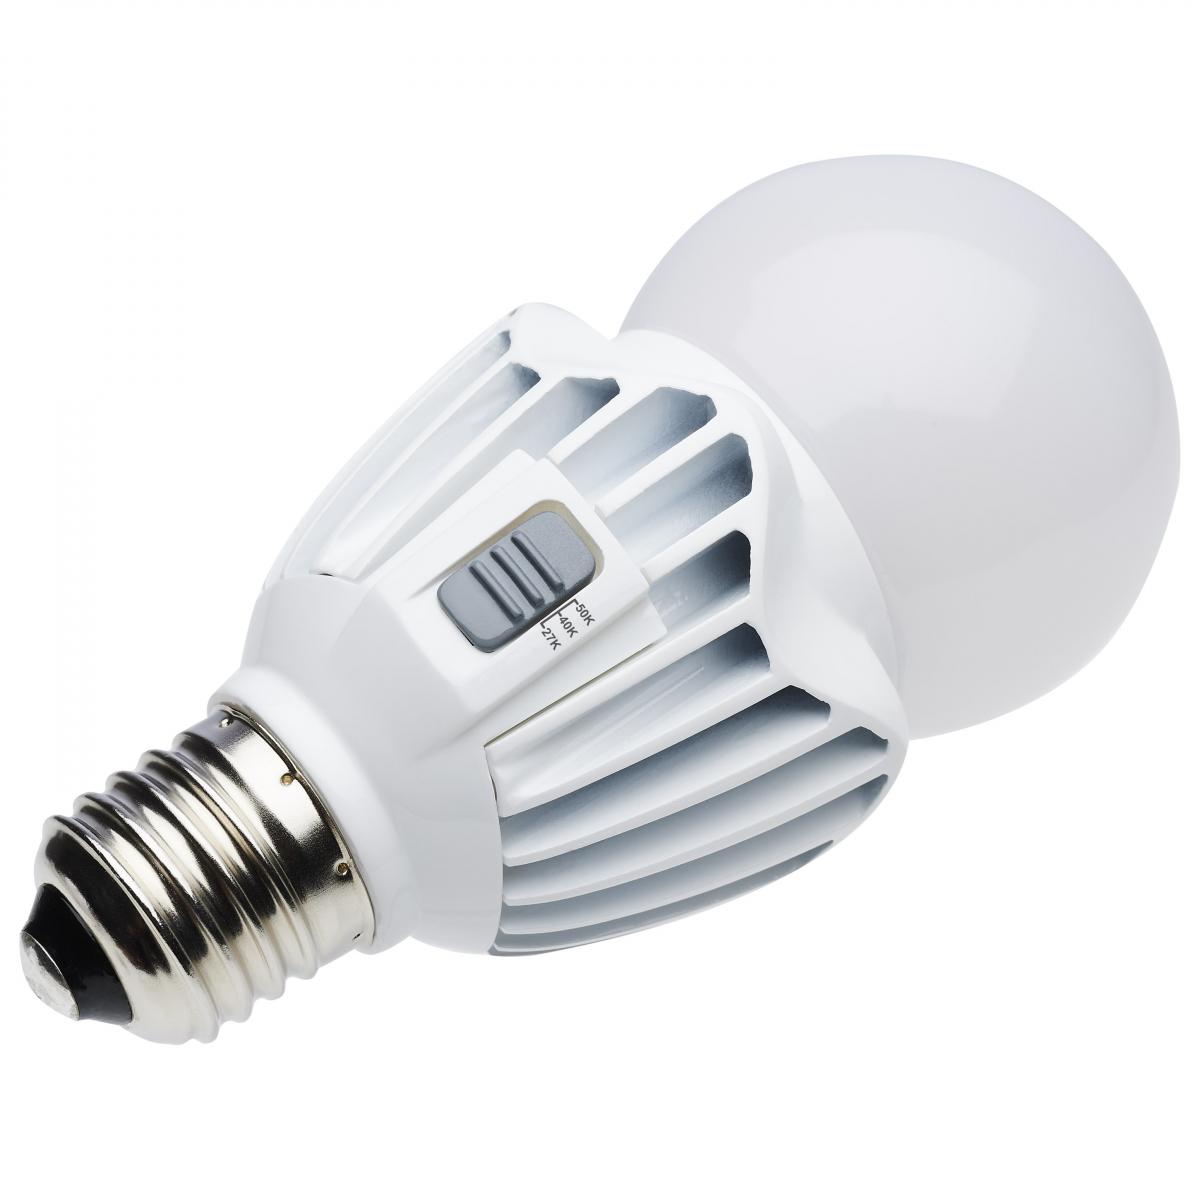 Hi-Pro A21 LED Bulb, 150W HID, 20 Watt, 3020 Lumens, Selectable CCT 27K/40K/50K, E26 Medium Base, Frosted Finish